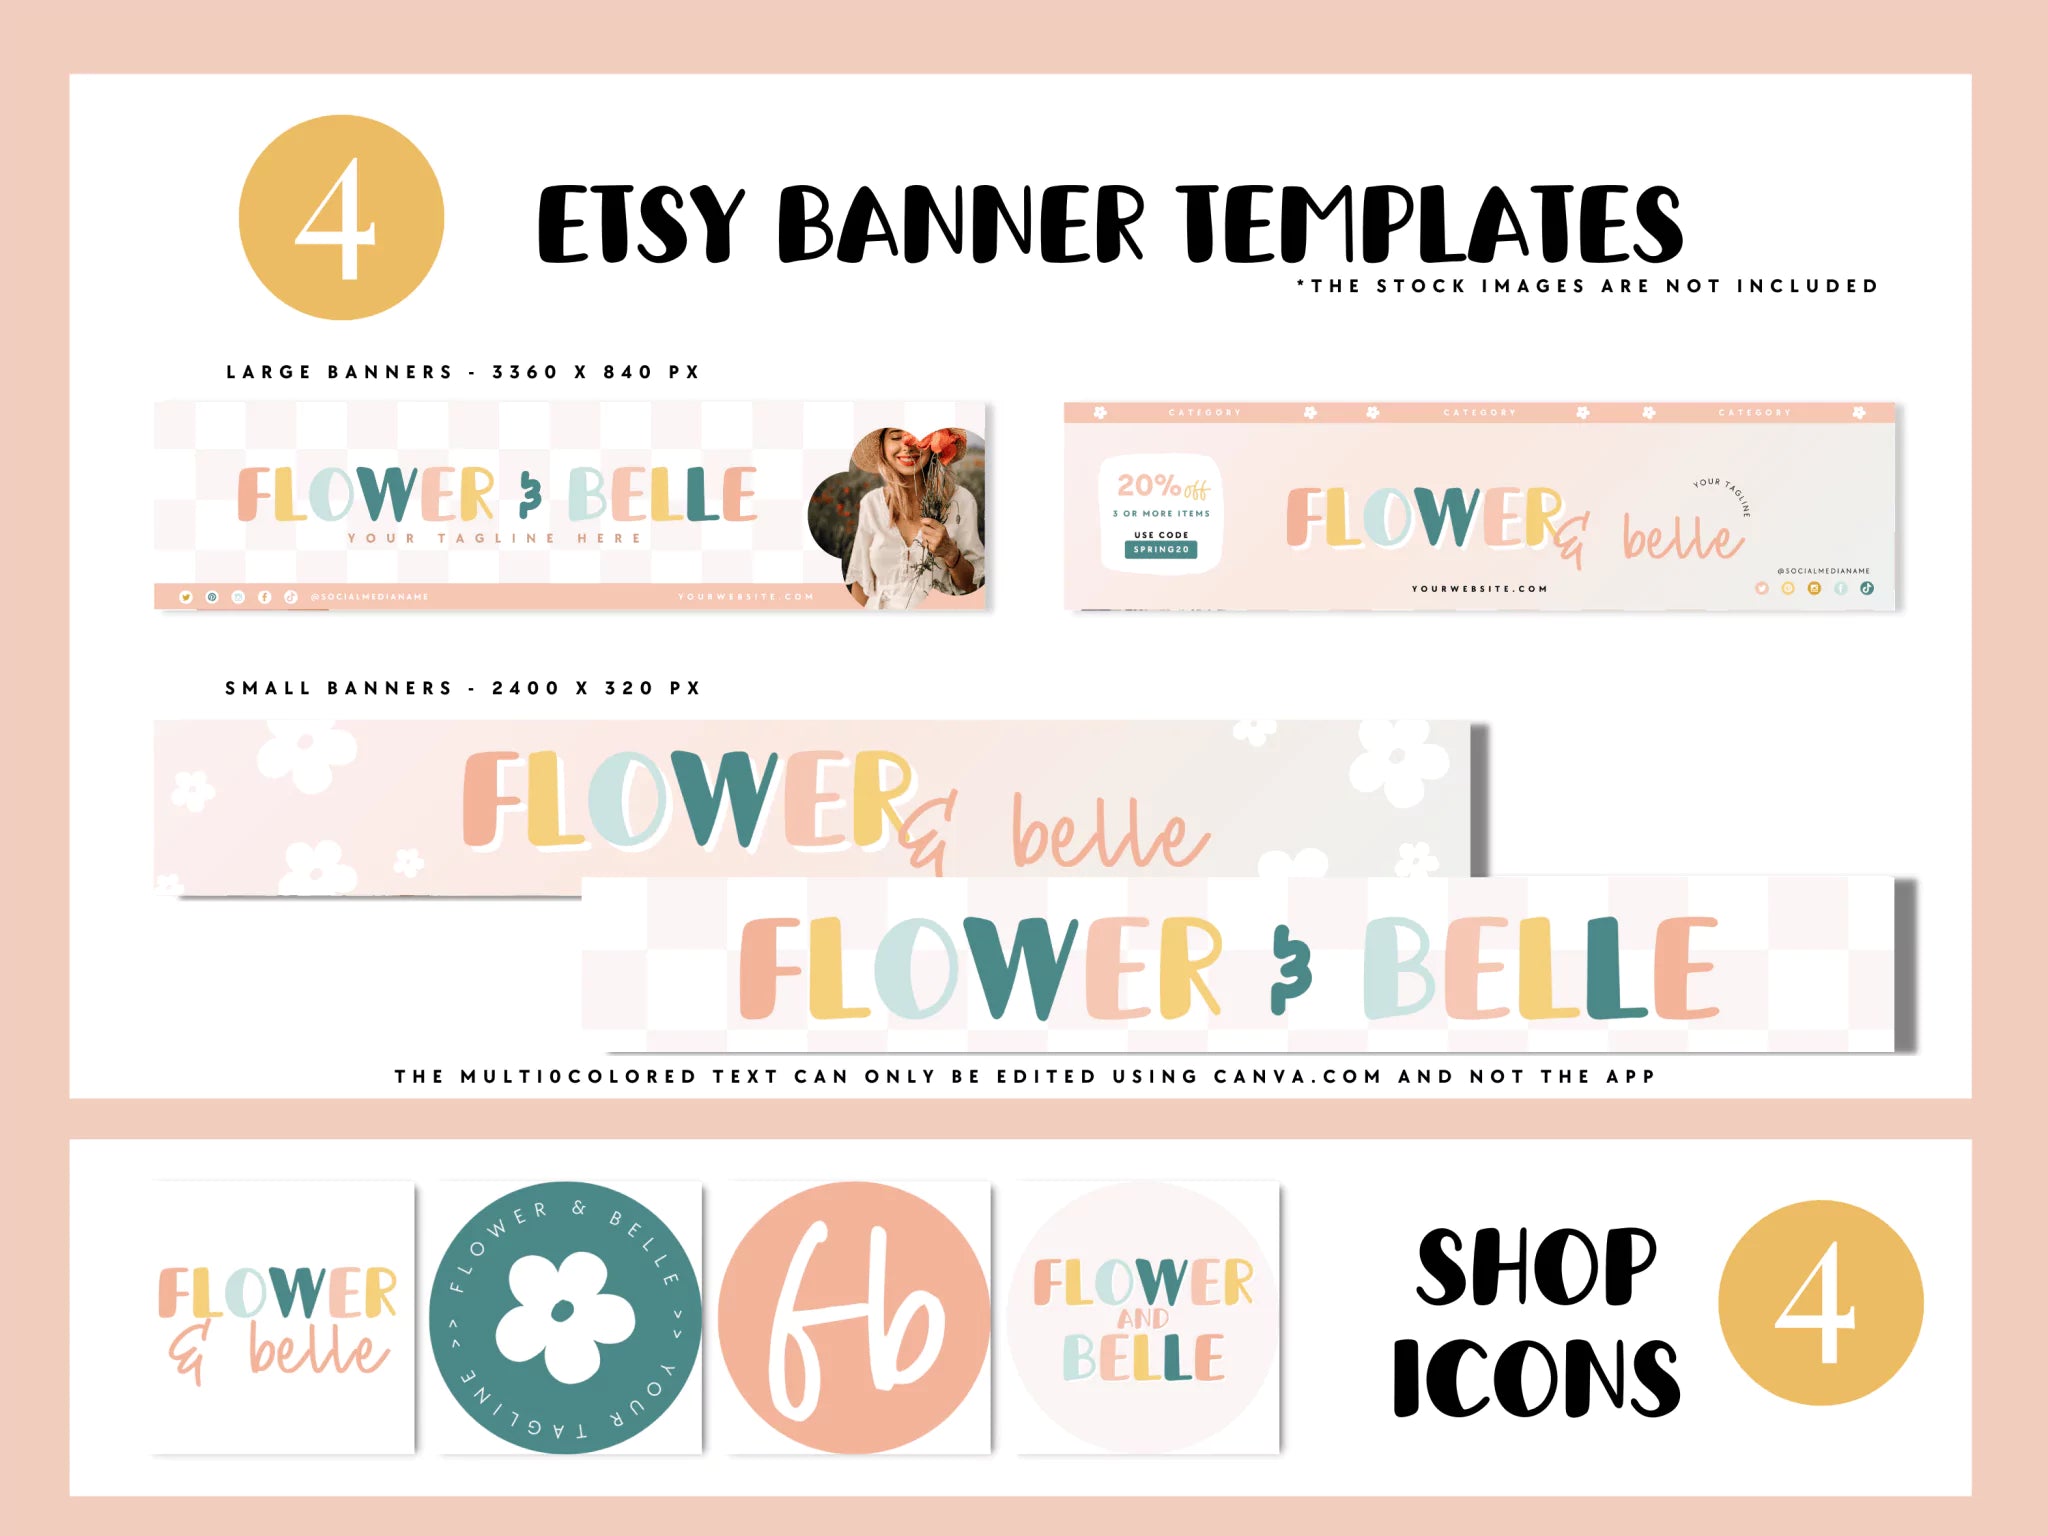 Pastel Rainbow Etsy Shop Kit Canva Template | Etsy Banner, Listing Photos, Icon | Cali - Trendy Fox Studio